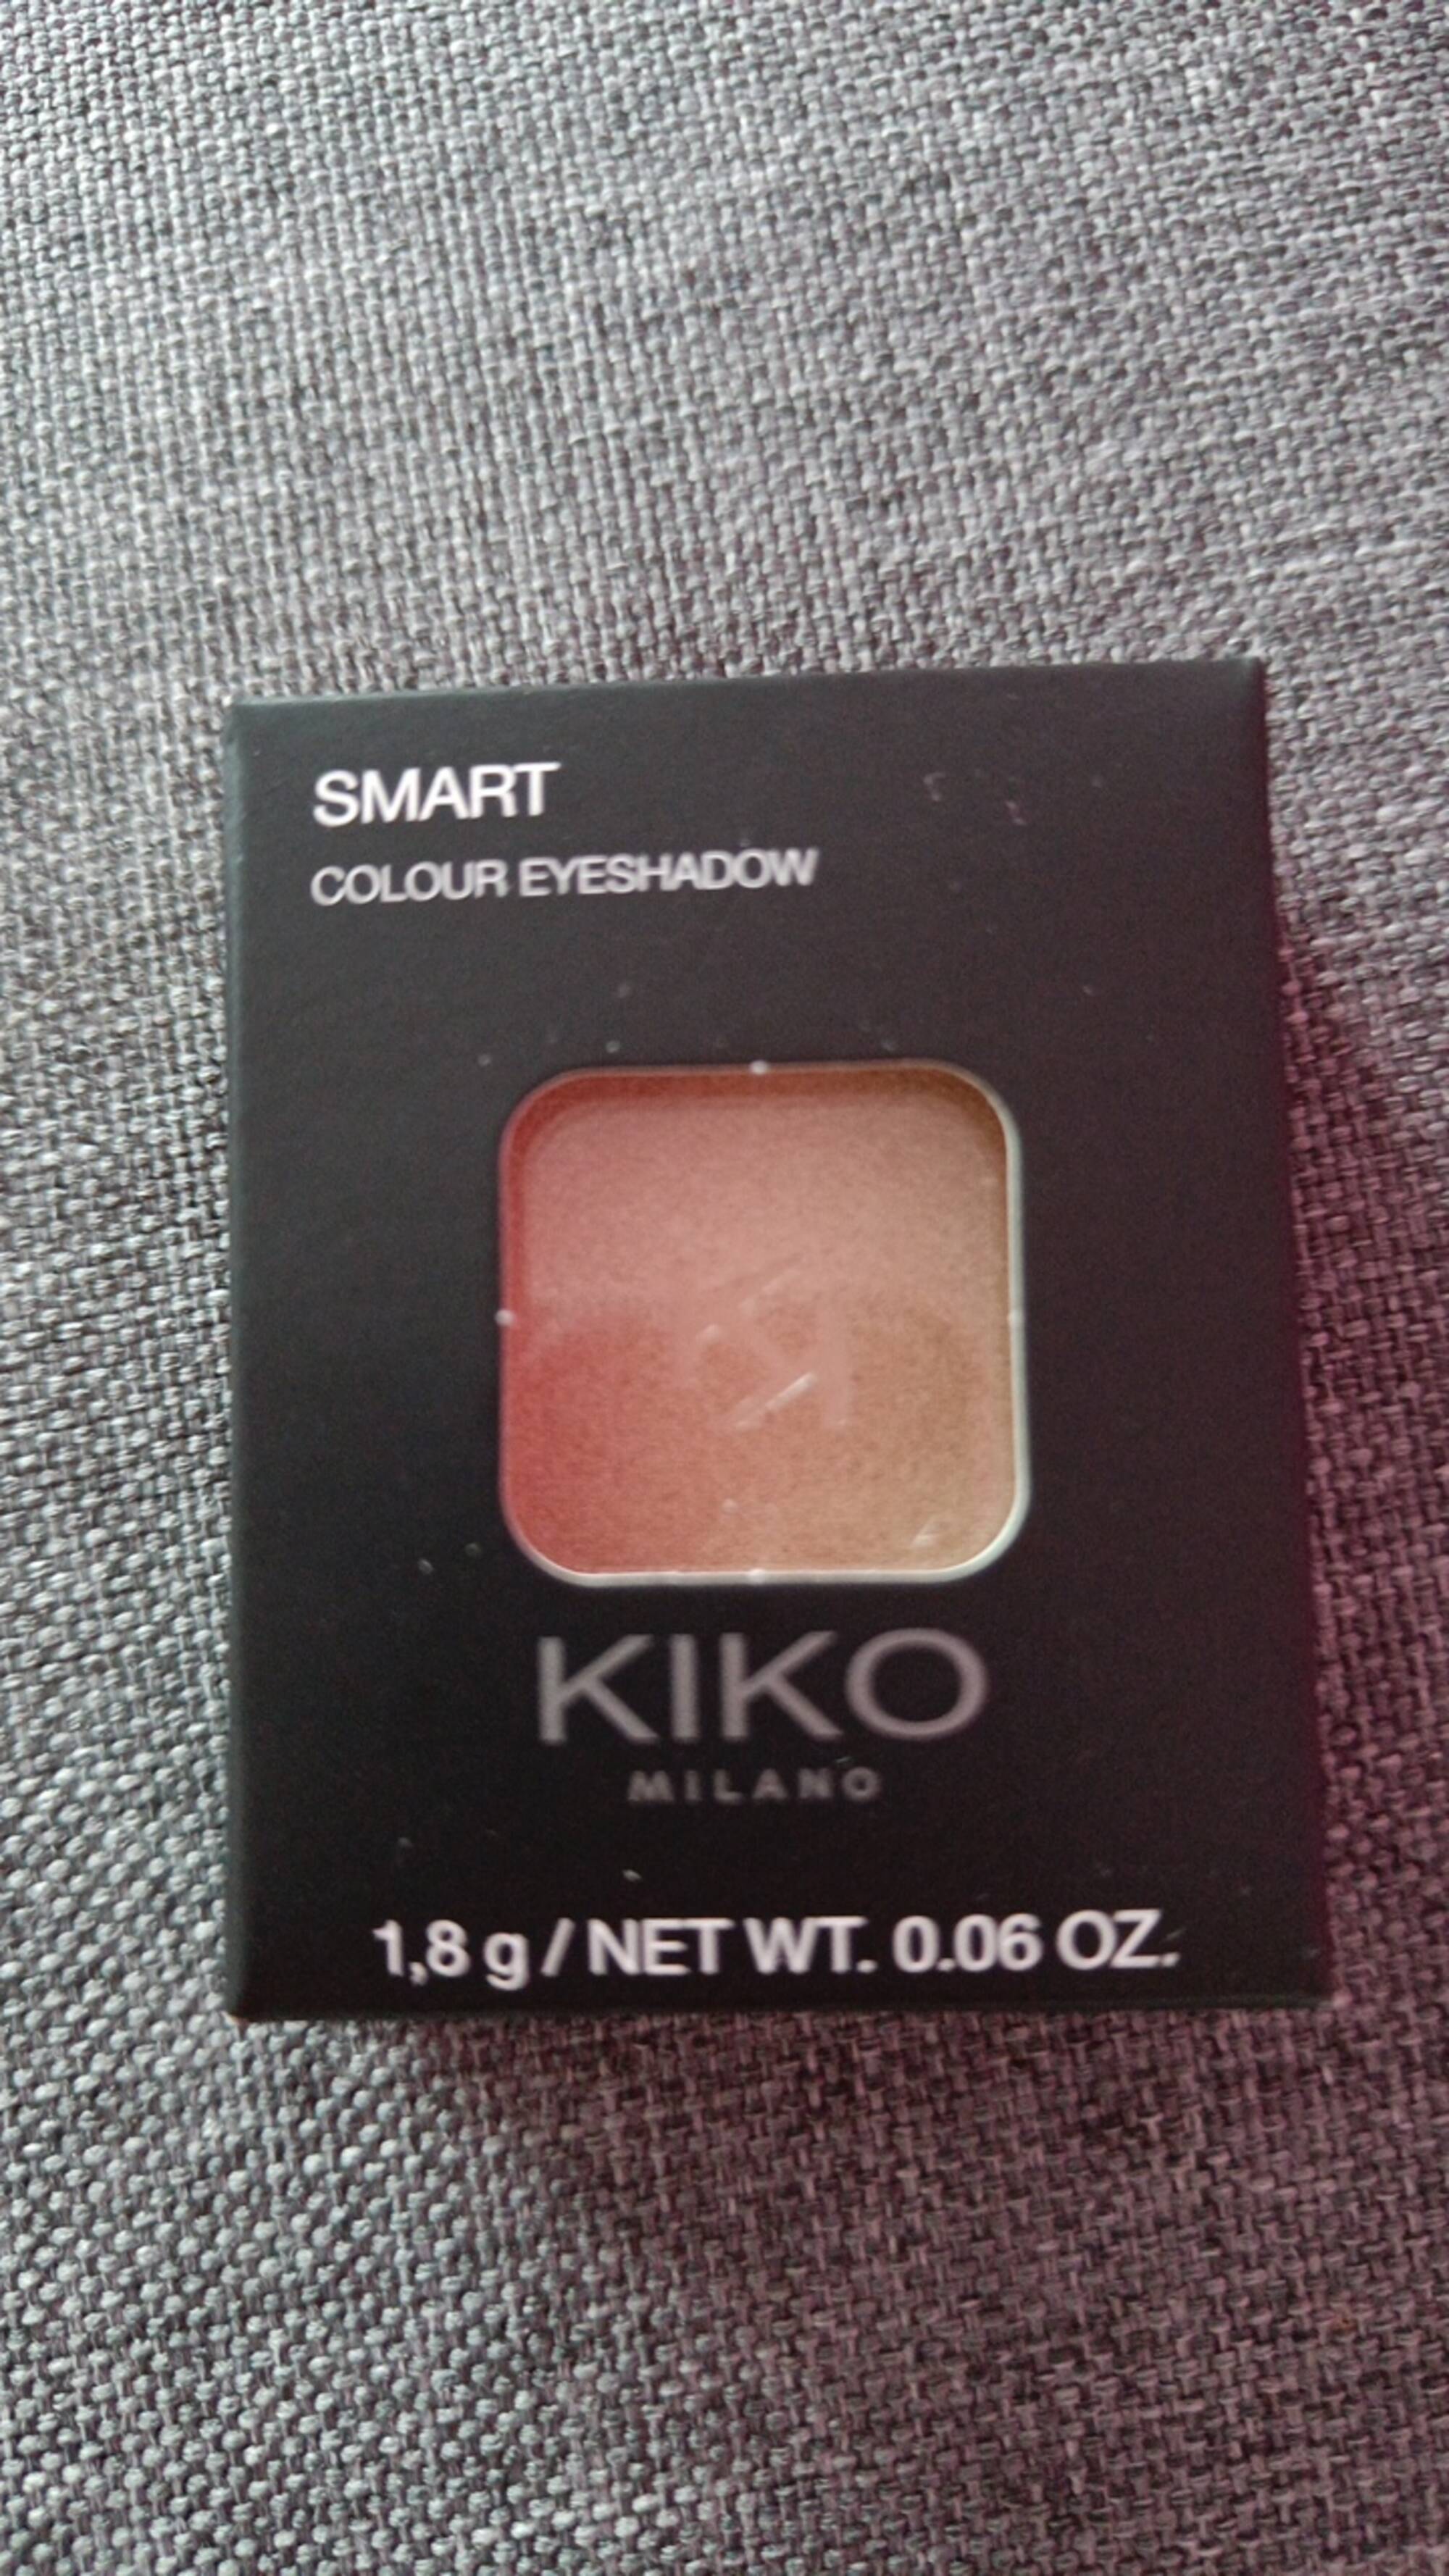 KIKO - Smart - Colour eyeshadow